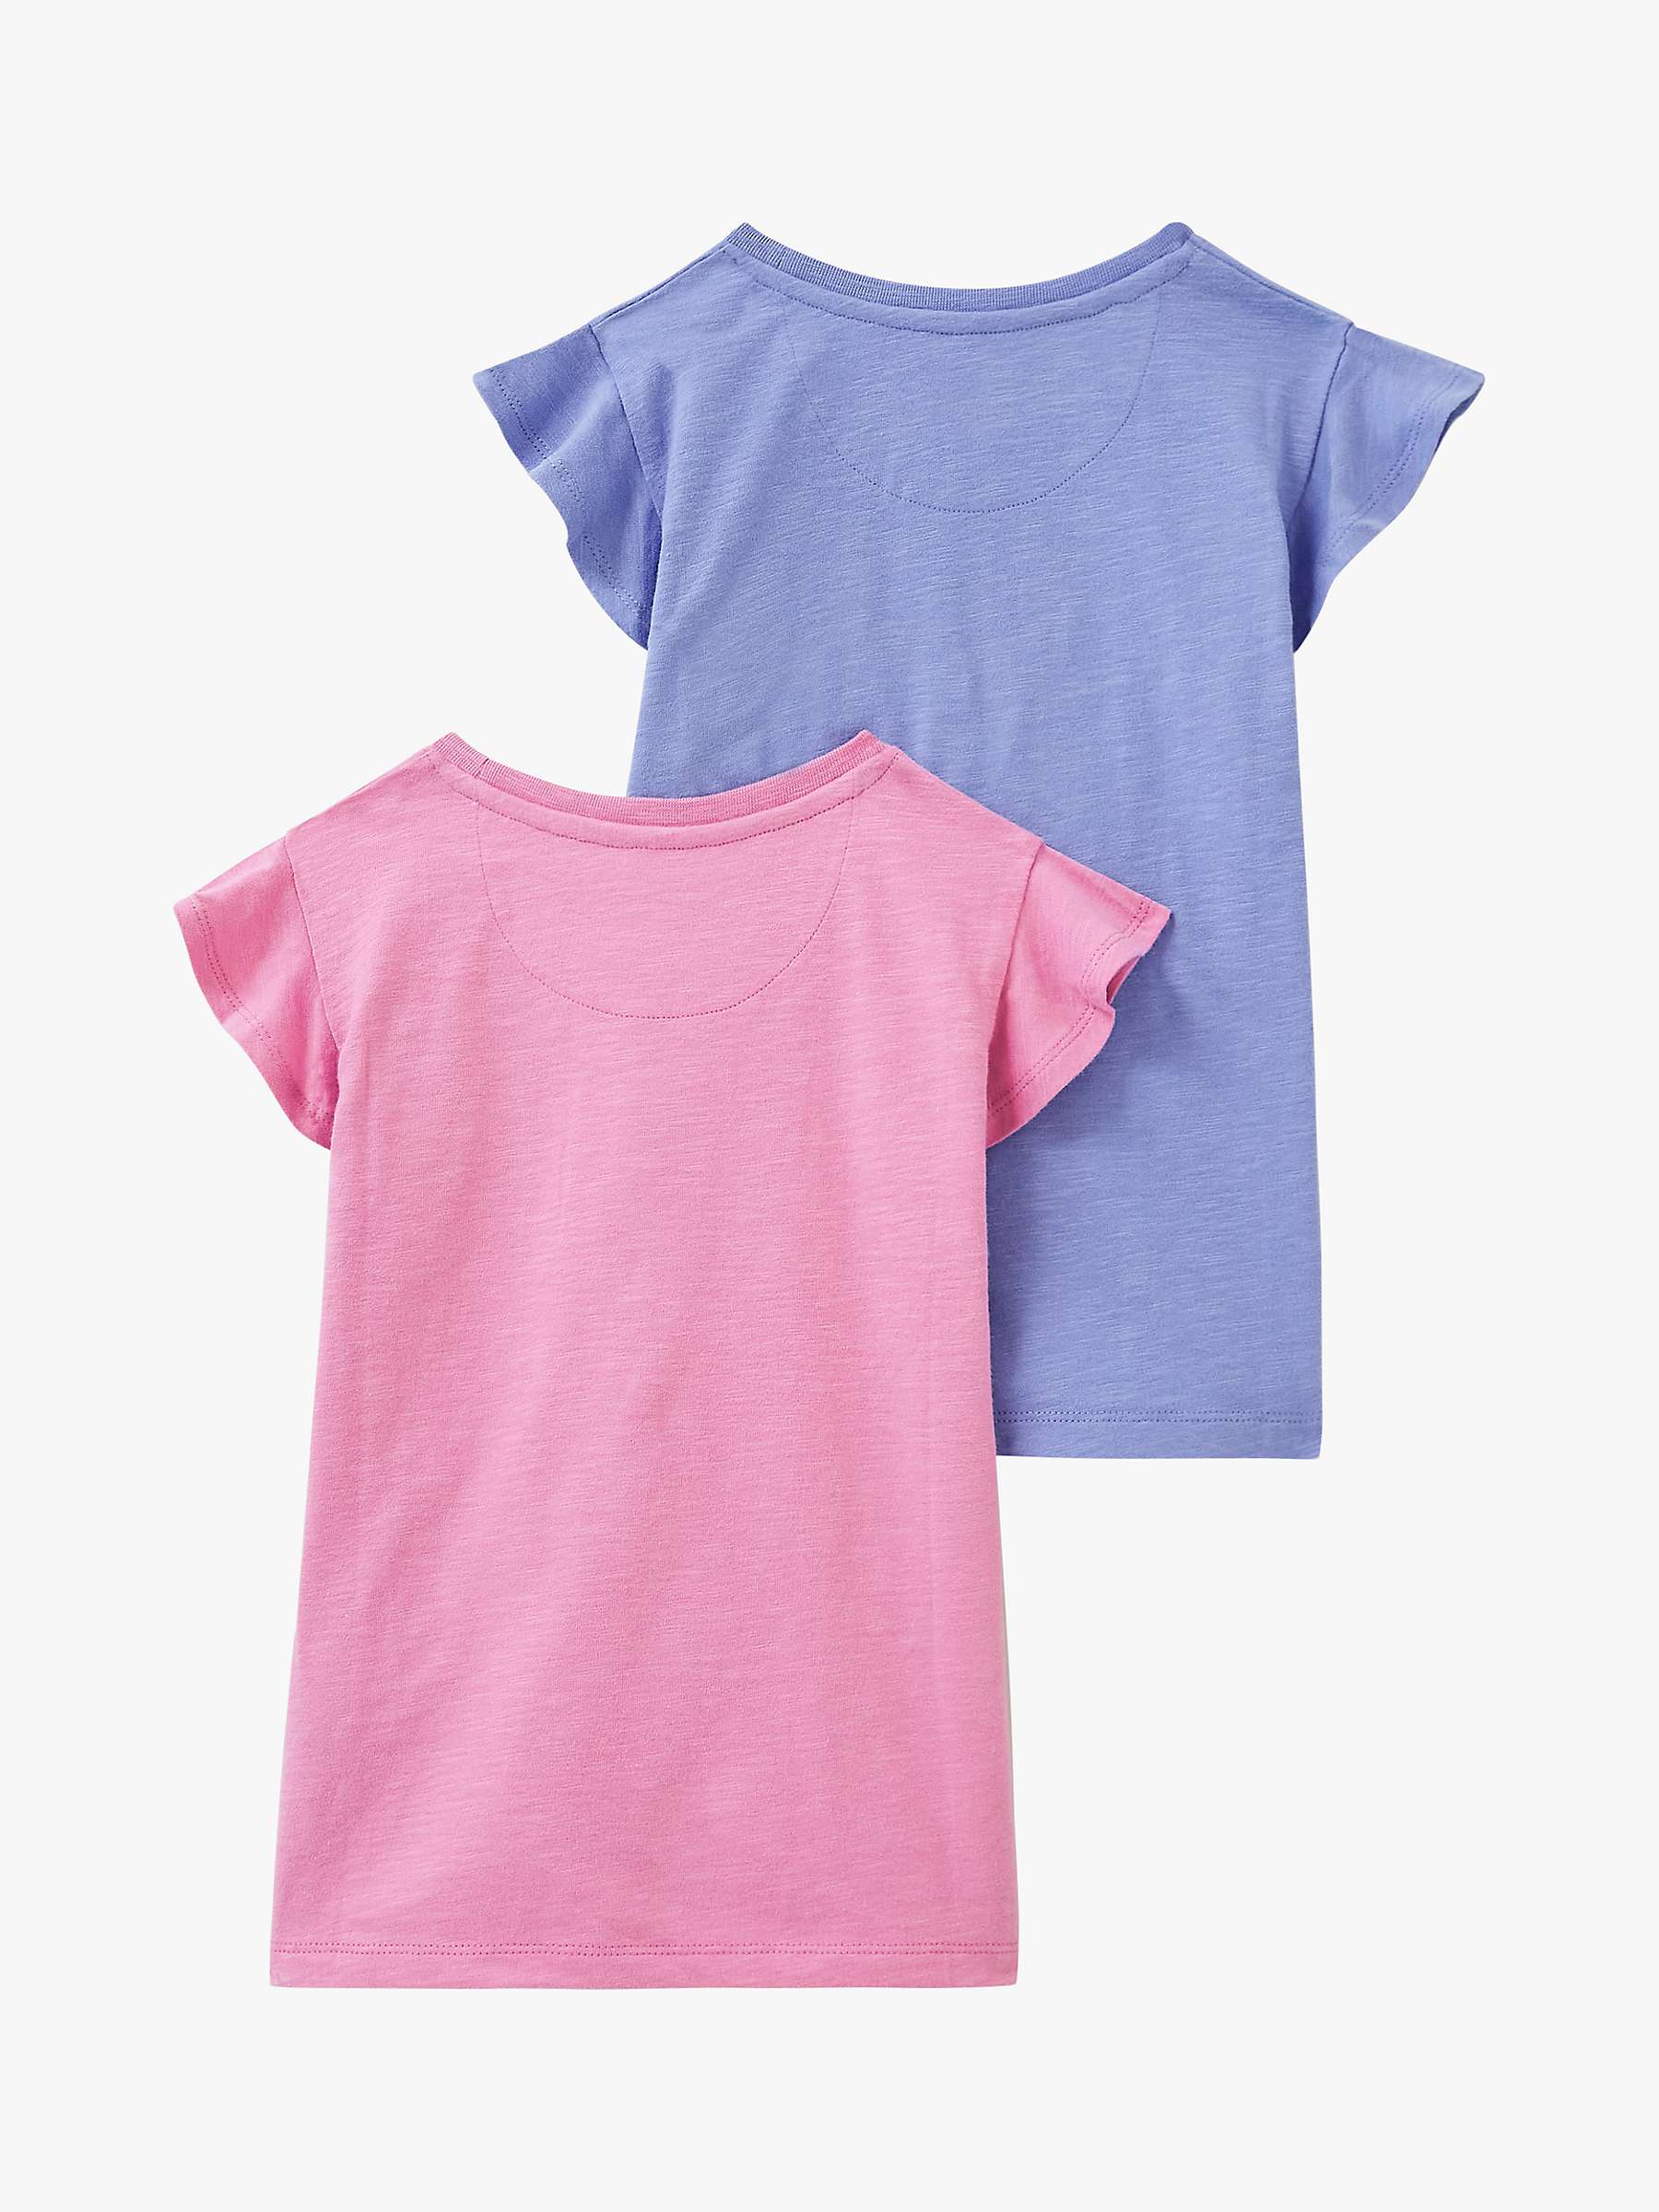 Buy Crew Clothing Kids' Ric-Rac Trim T-Shirts, Pack of 2, Pink/Purple Online at johnlewis.com